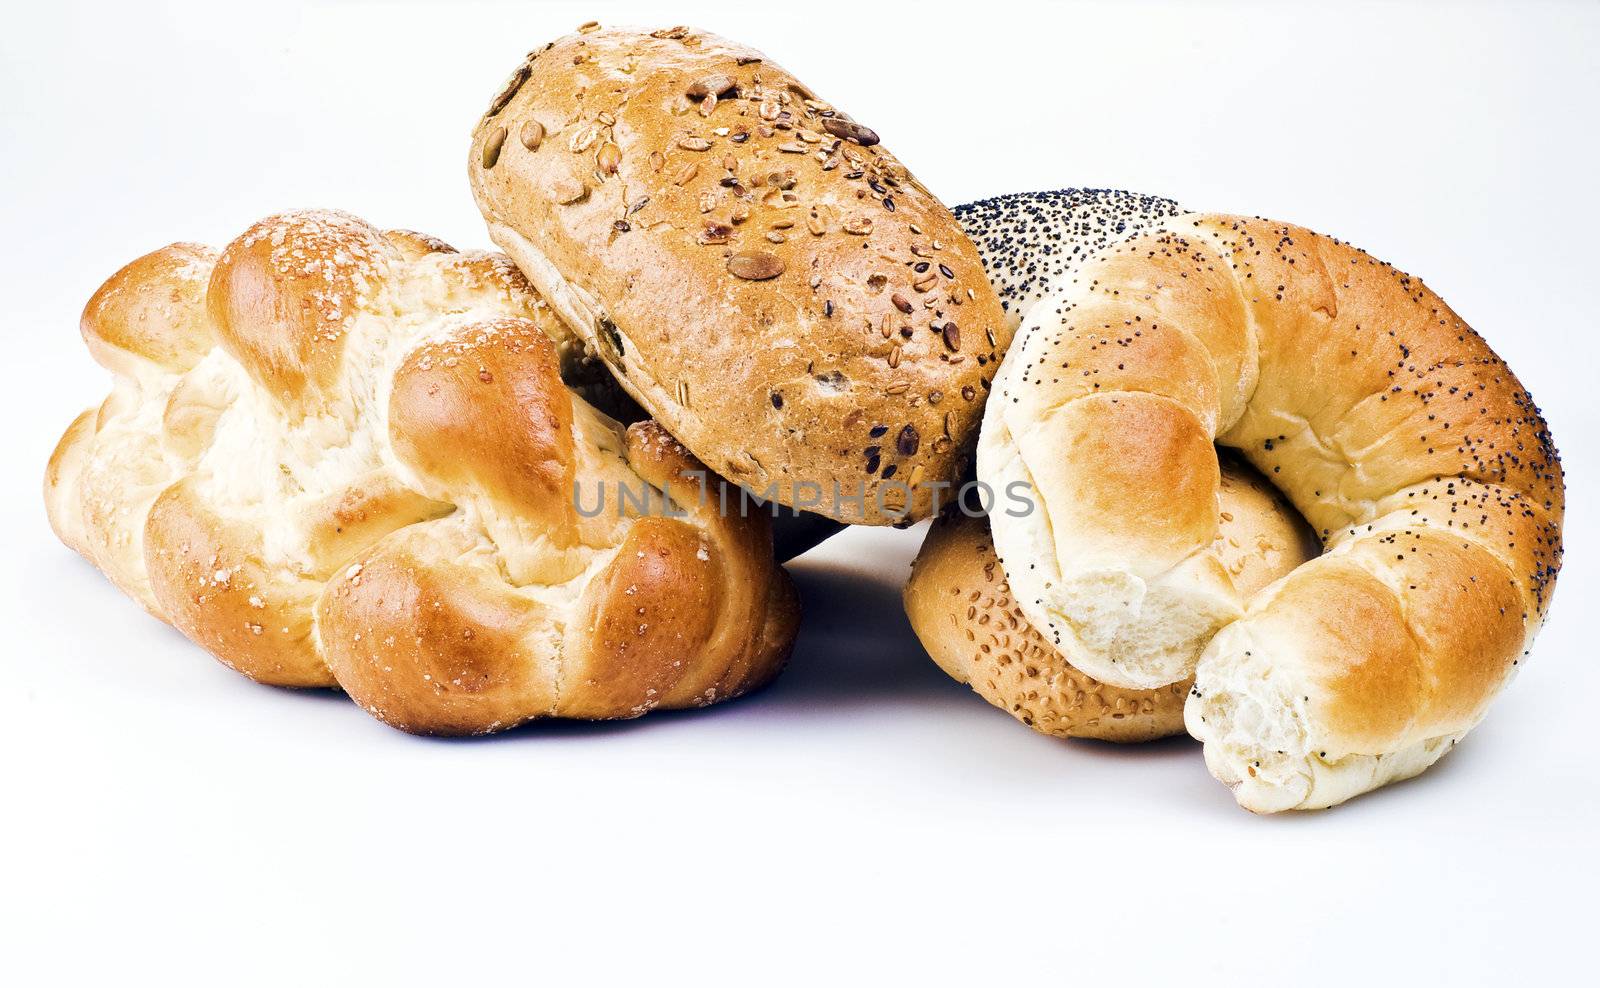 Bread rolls by caldix